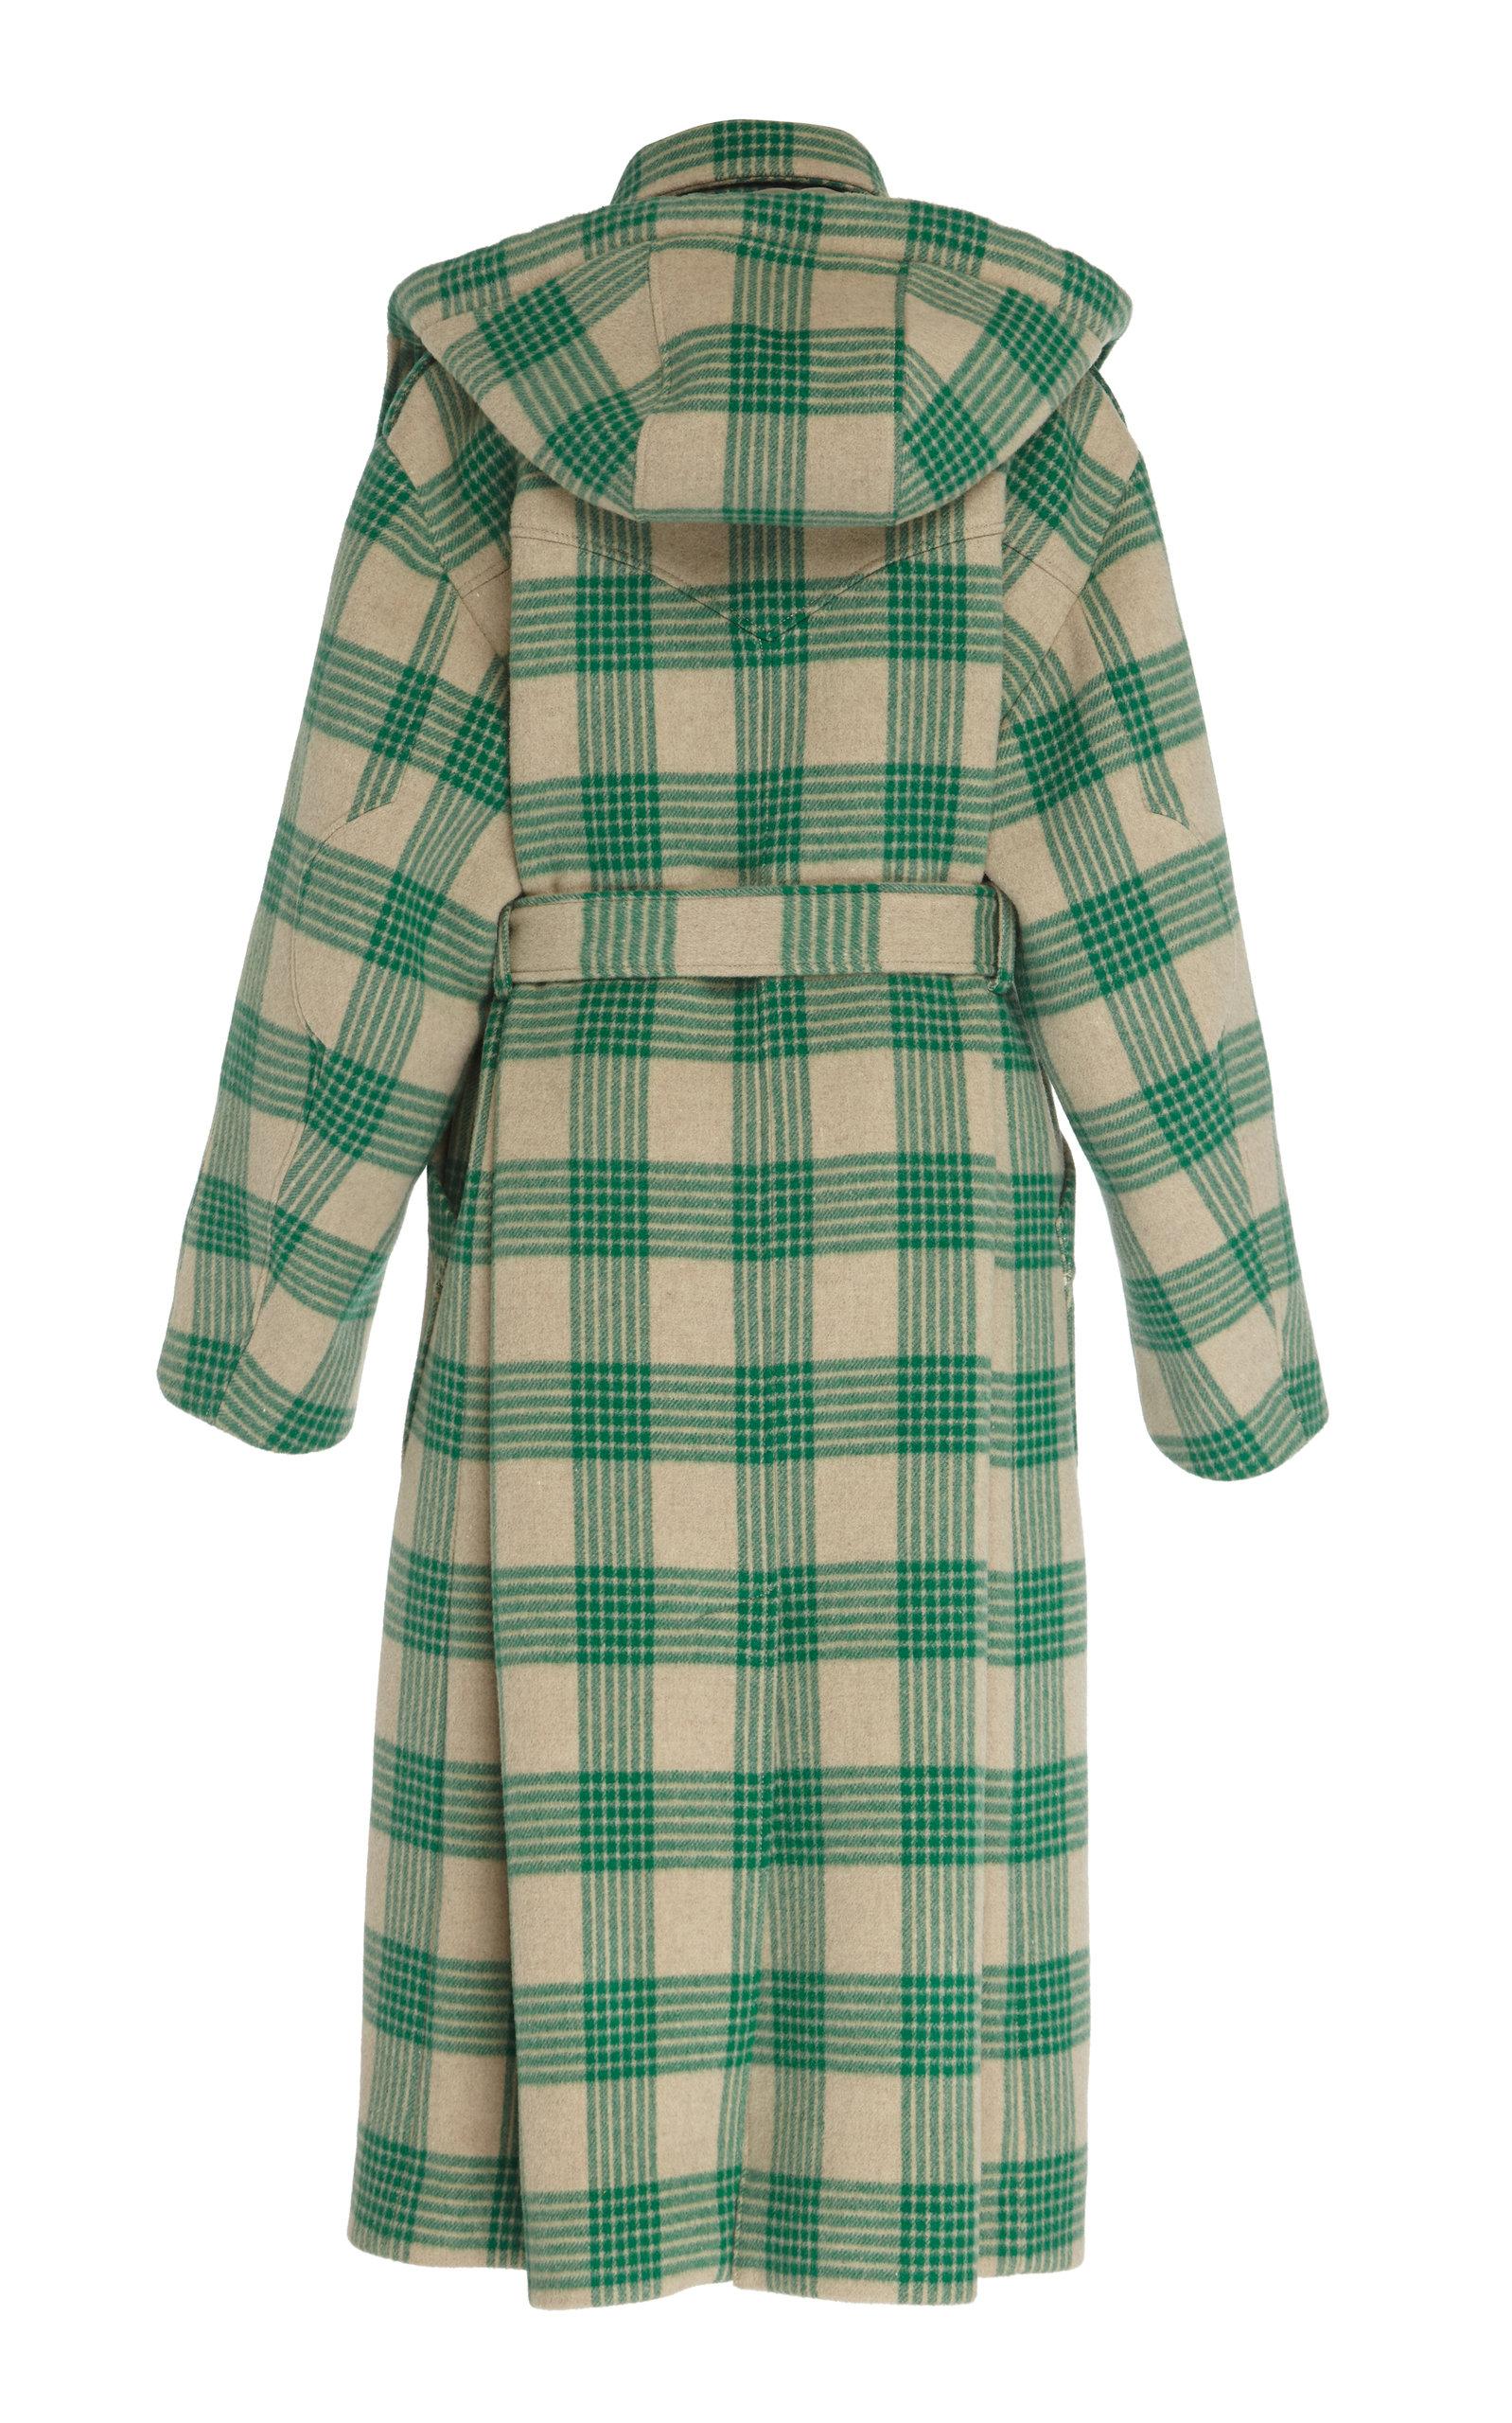 Rejina Pyo Charlie Hooded Checked Wool Coat in Green - Lyst